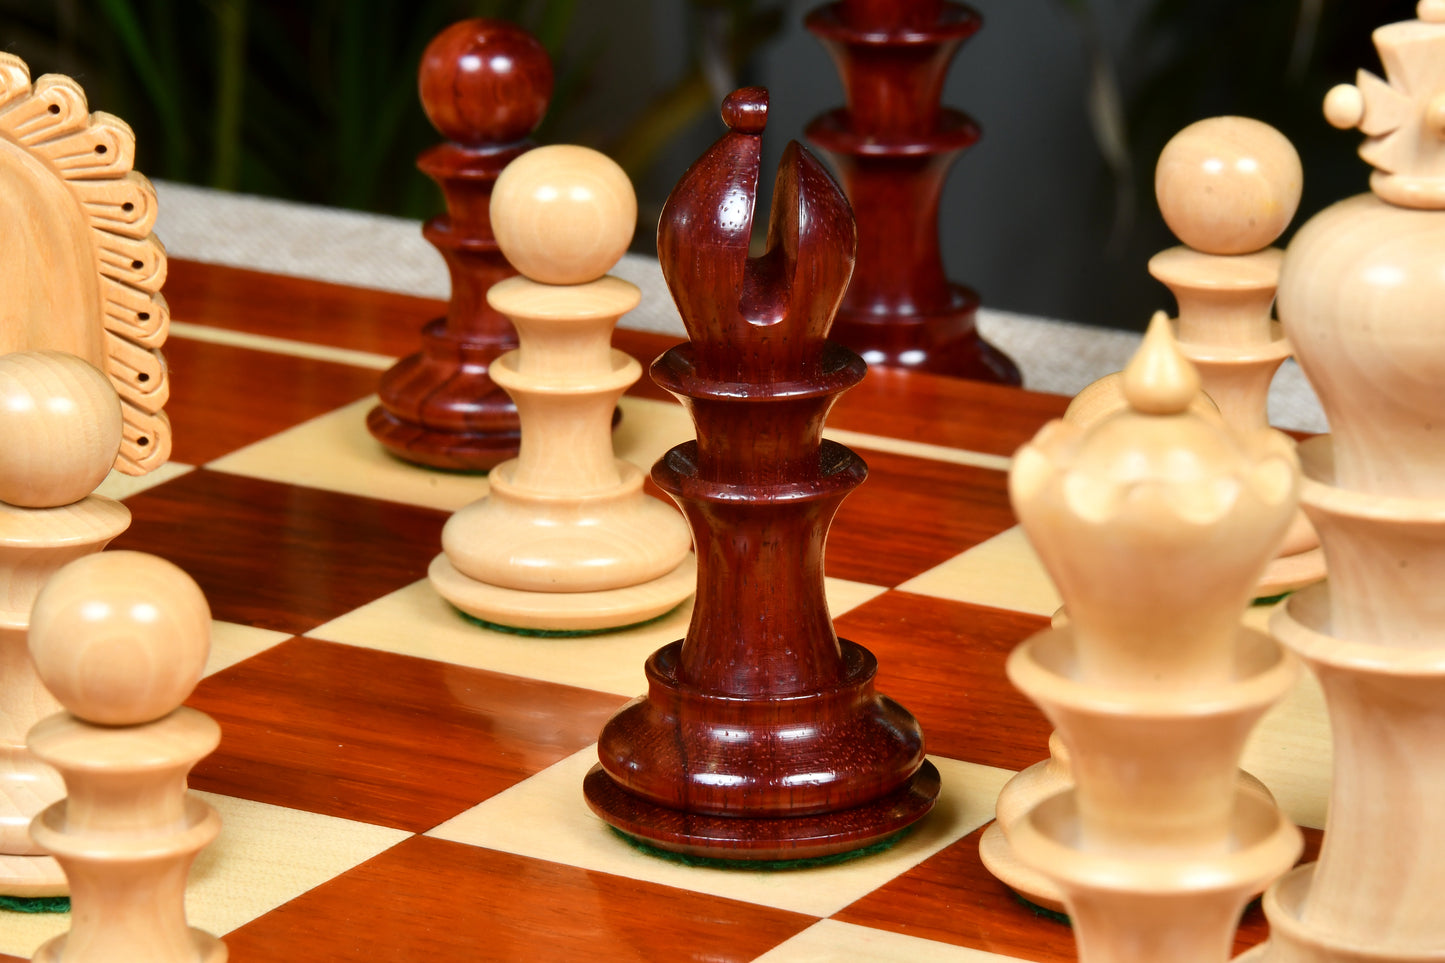 The Hurricane Series Staunton Luxury Chess Pieces Bud Rose & Box Wood - 4.7" King